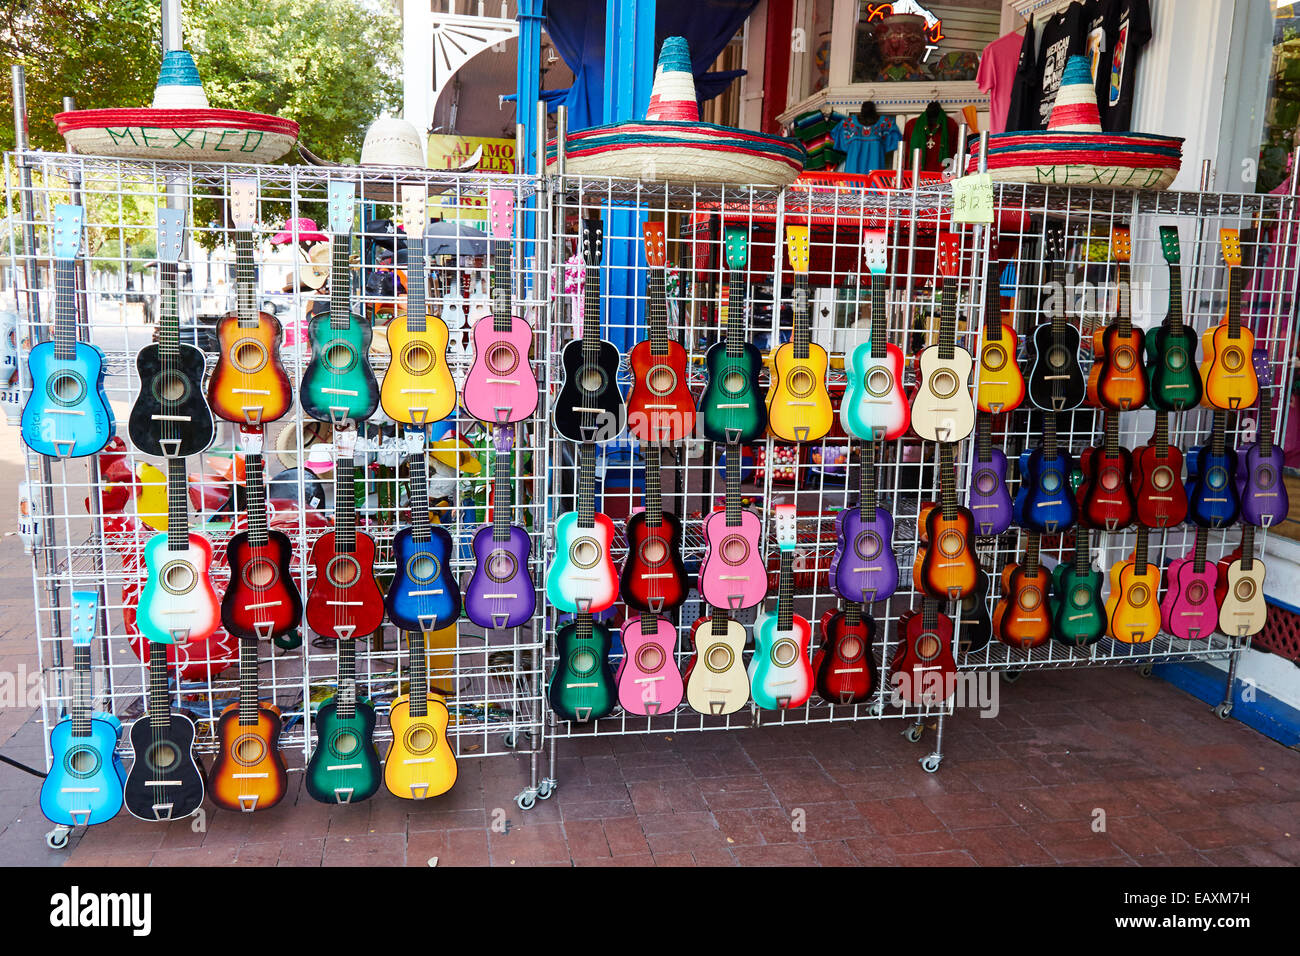 Colorful small guitars displayed on a street stall, San Antonio, Texas USA Stock Photo